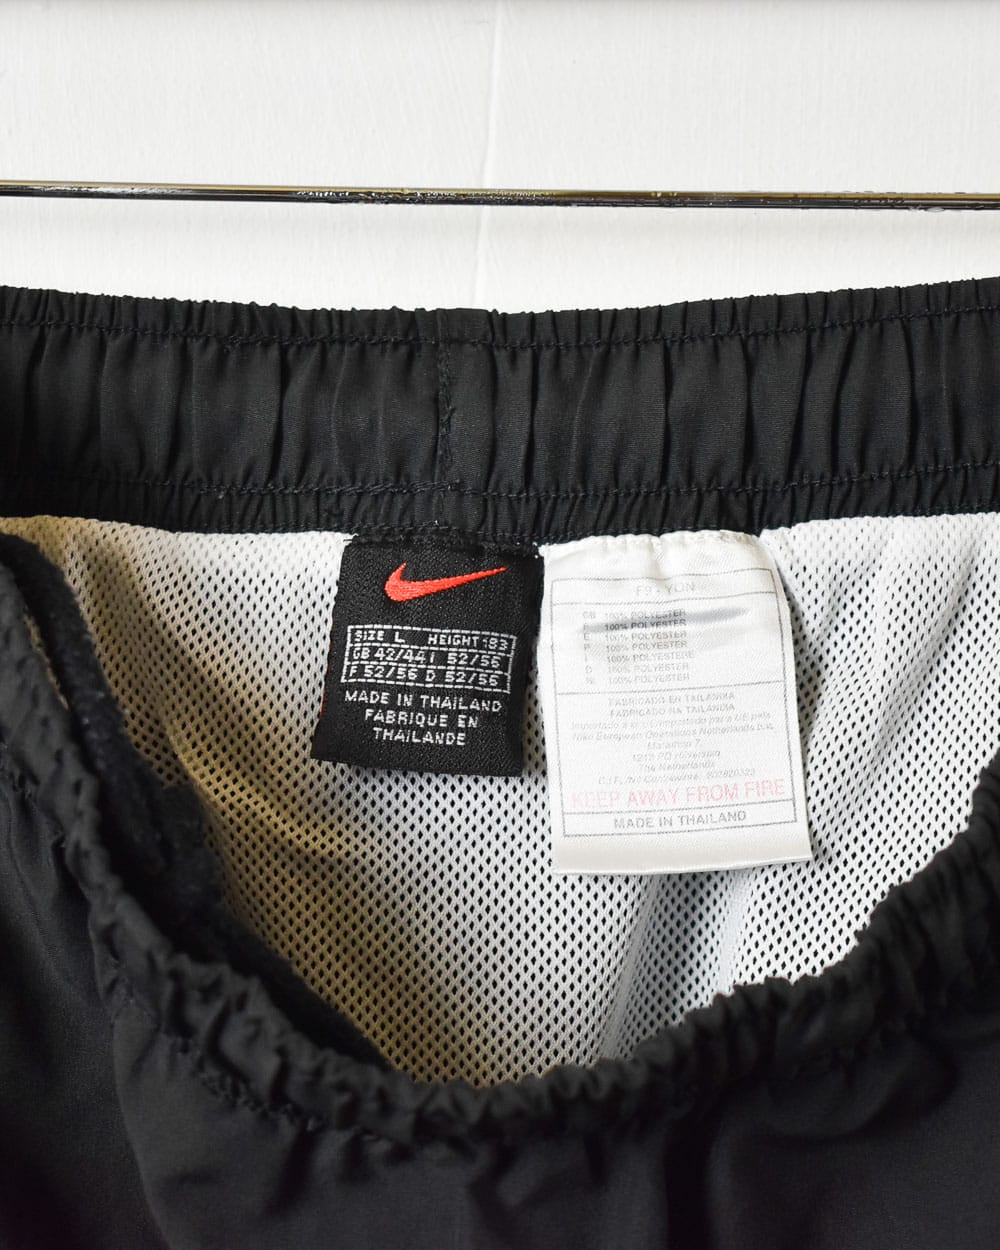 Black Nike Mesh Shorts - Large